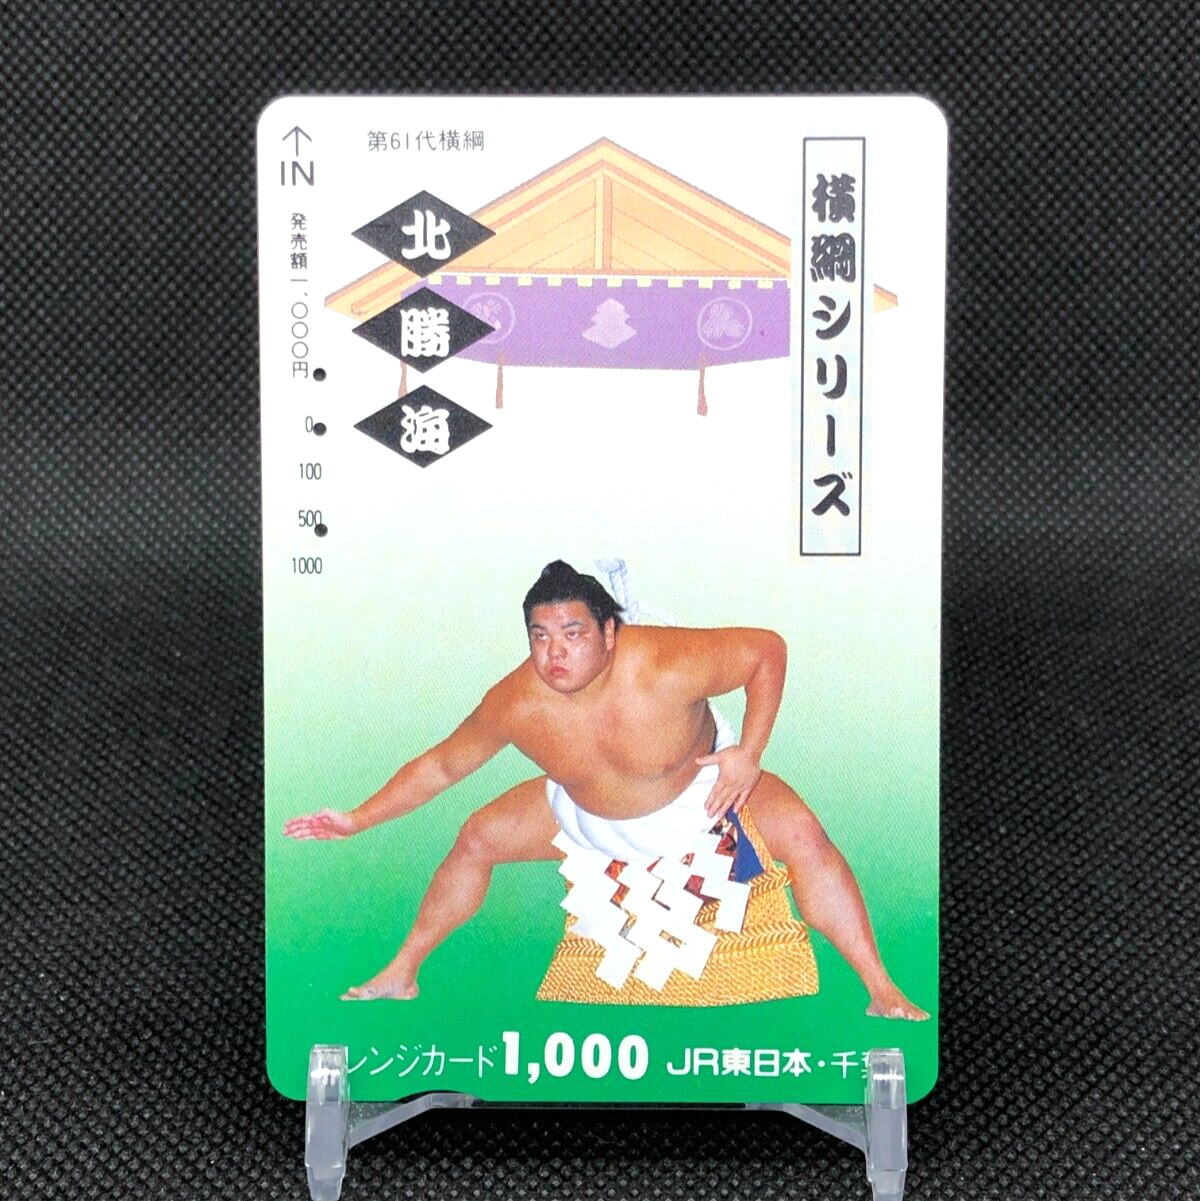 Hokutoumi Yokozuna series used Orange Card Prepaid transportation Card Japan